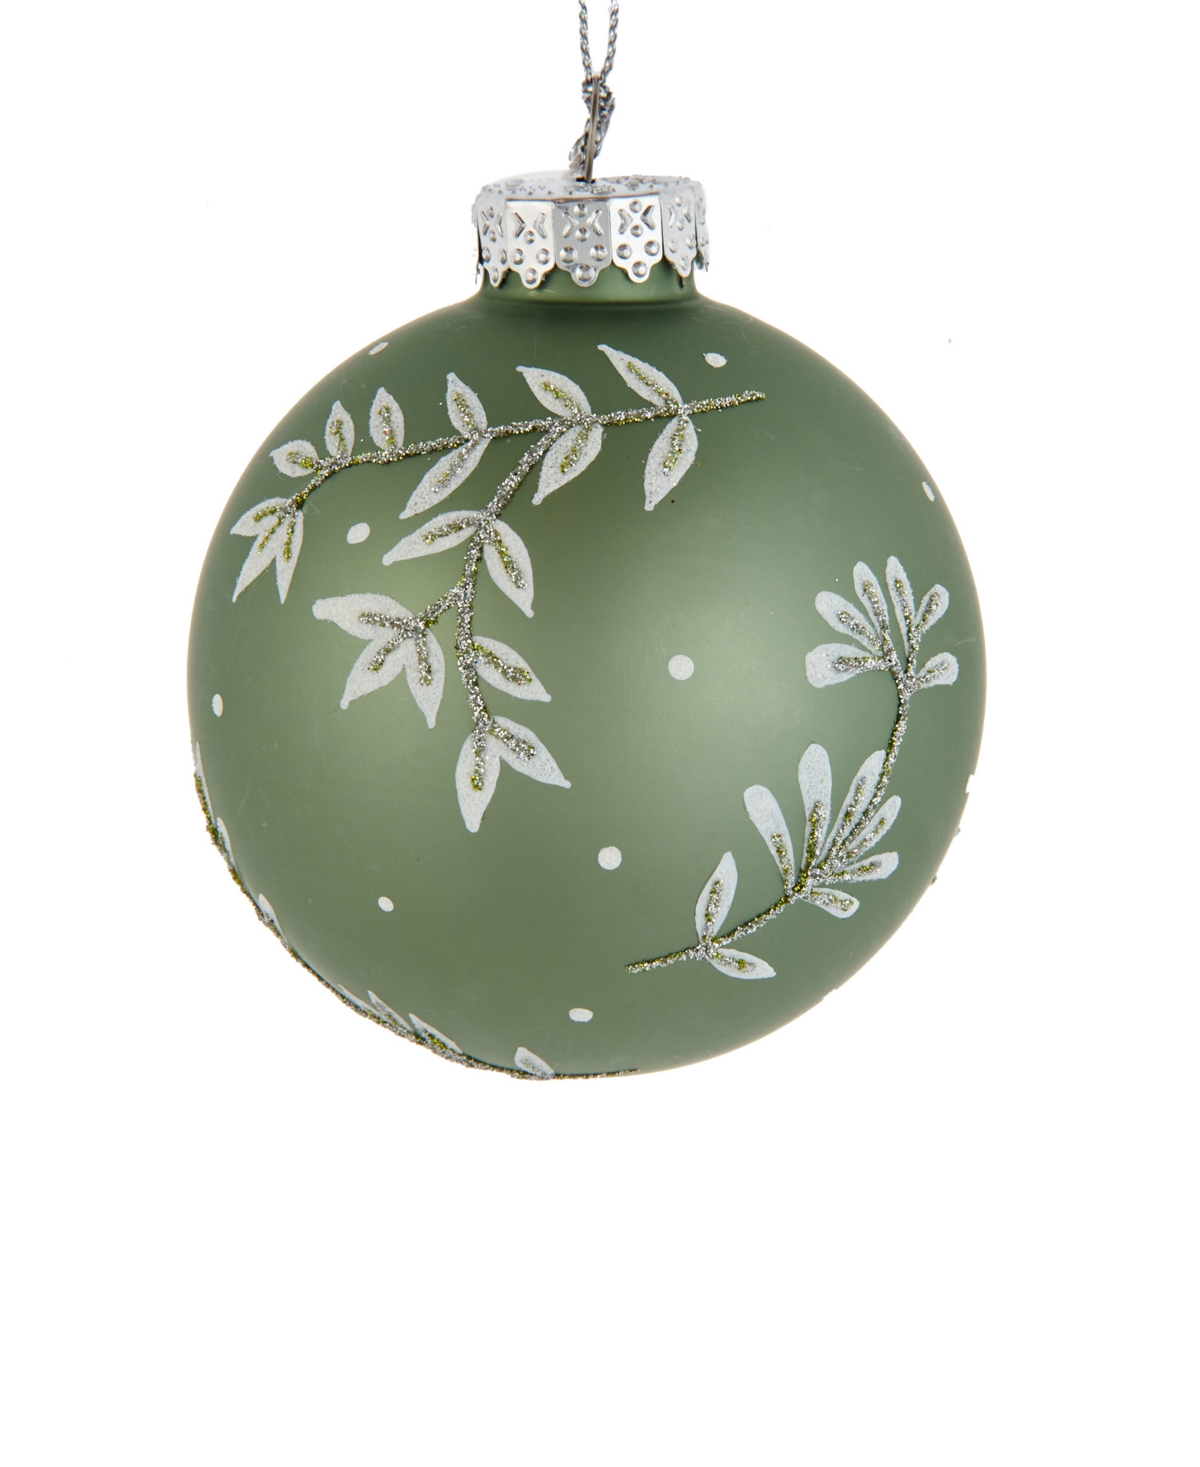 Kurt Adler 80mm Leaf Design Ball Ornaments, 6 Piece Set In Green